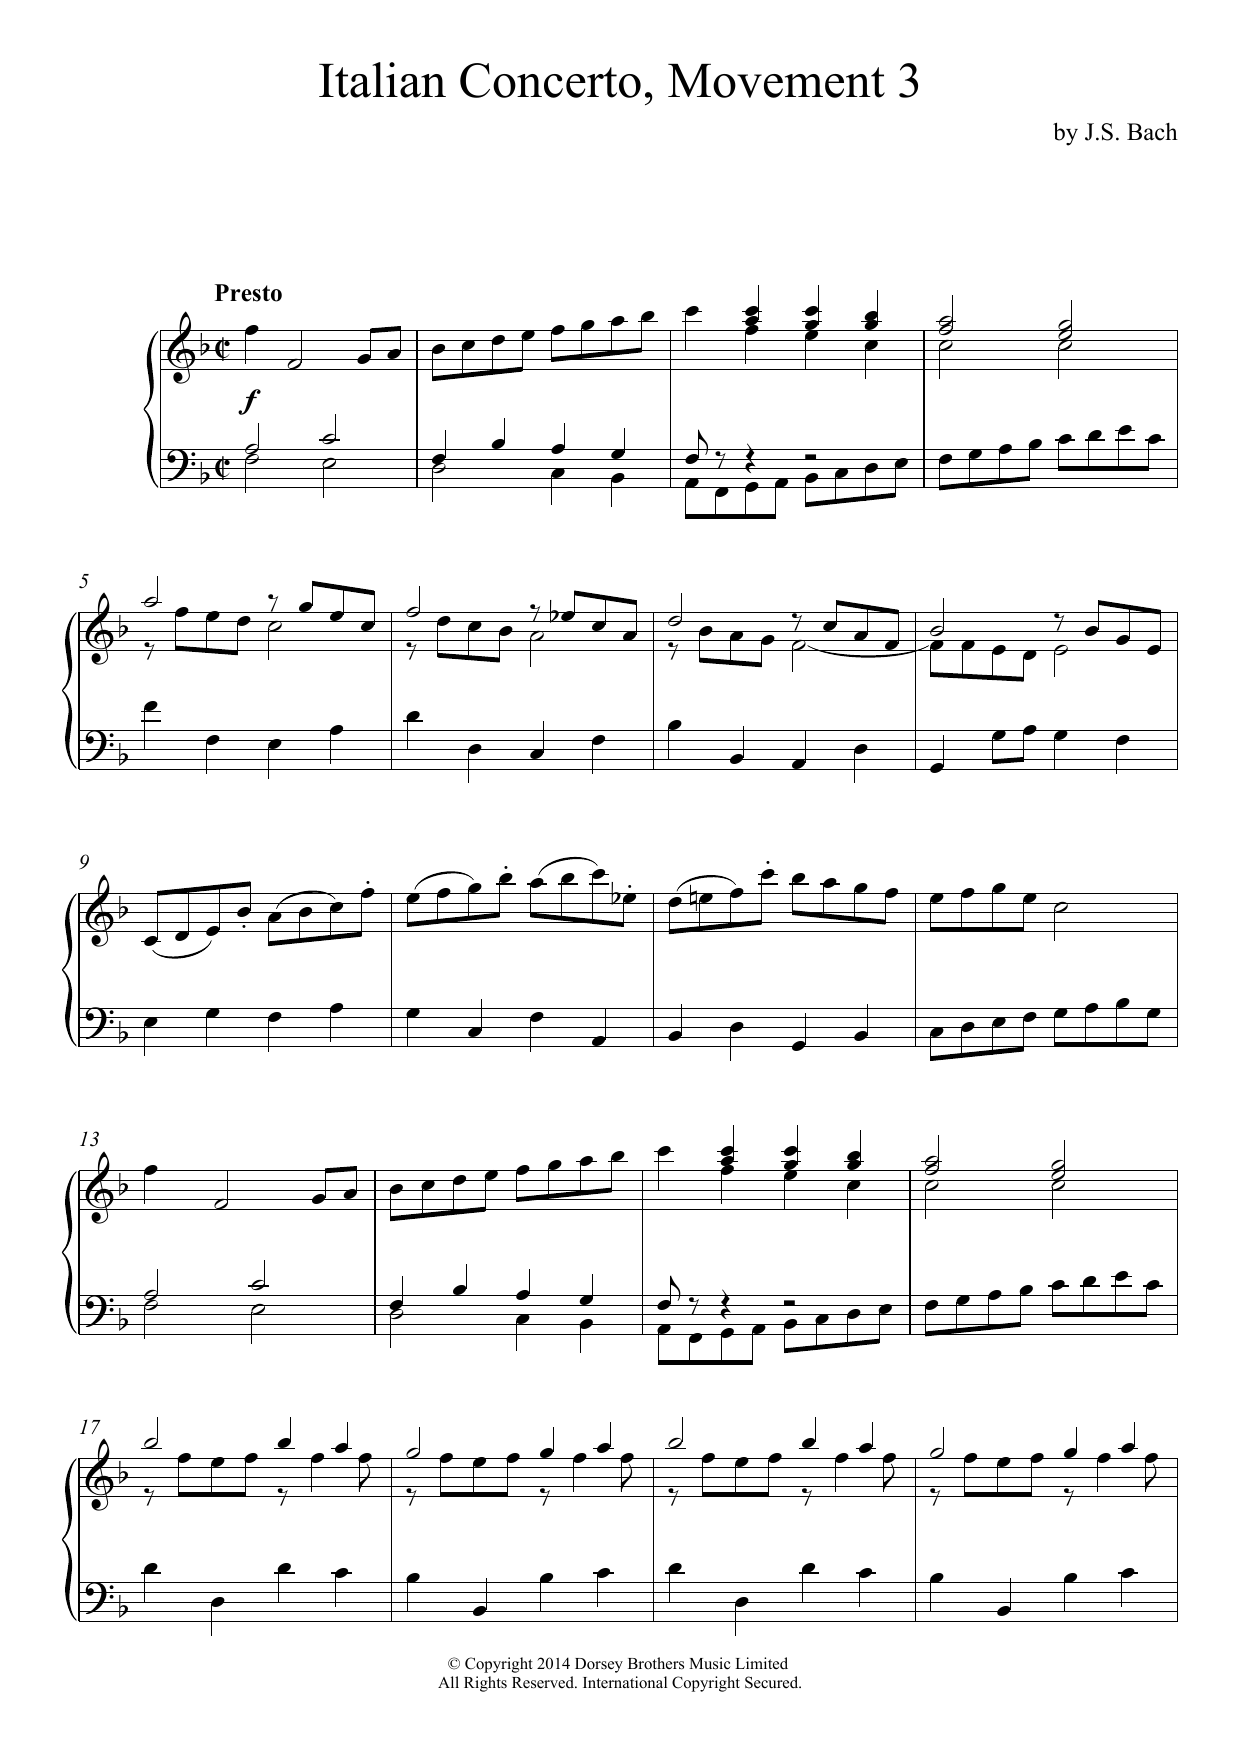 Johann Sebastian Bach Italian Concerto (3rd Movement) Sheet Music Notes & Chords for Piano - Download or Print PDF